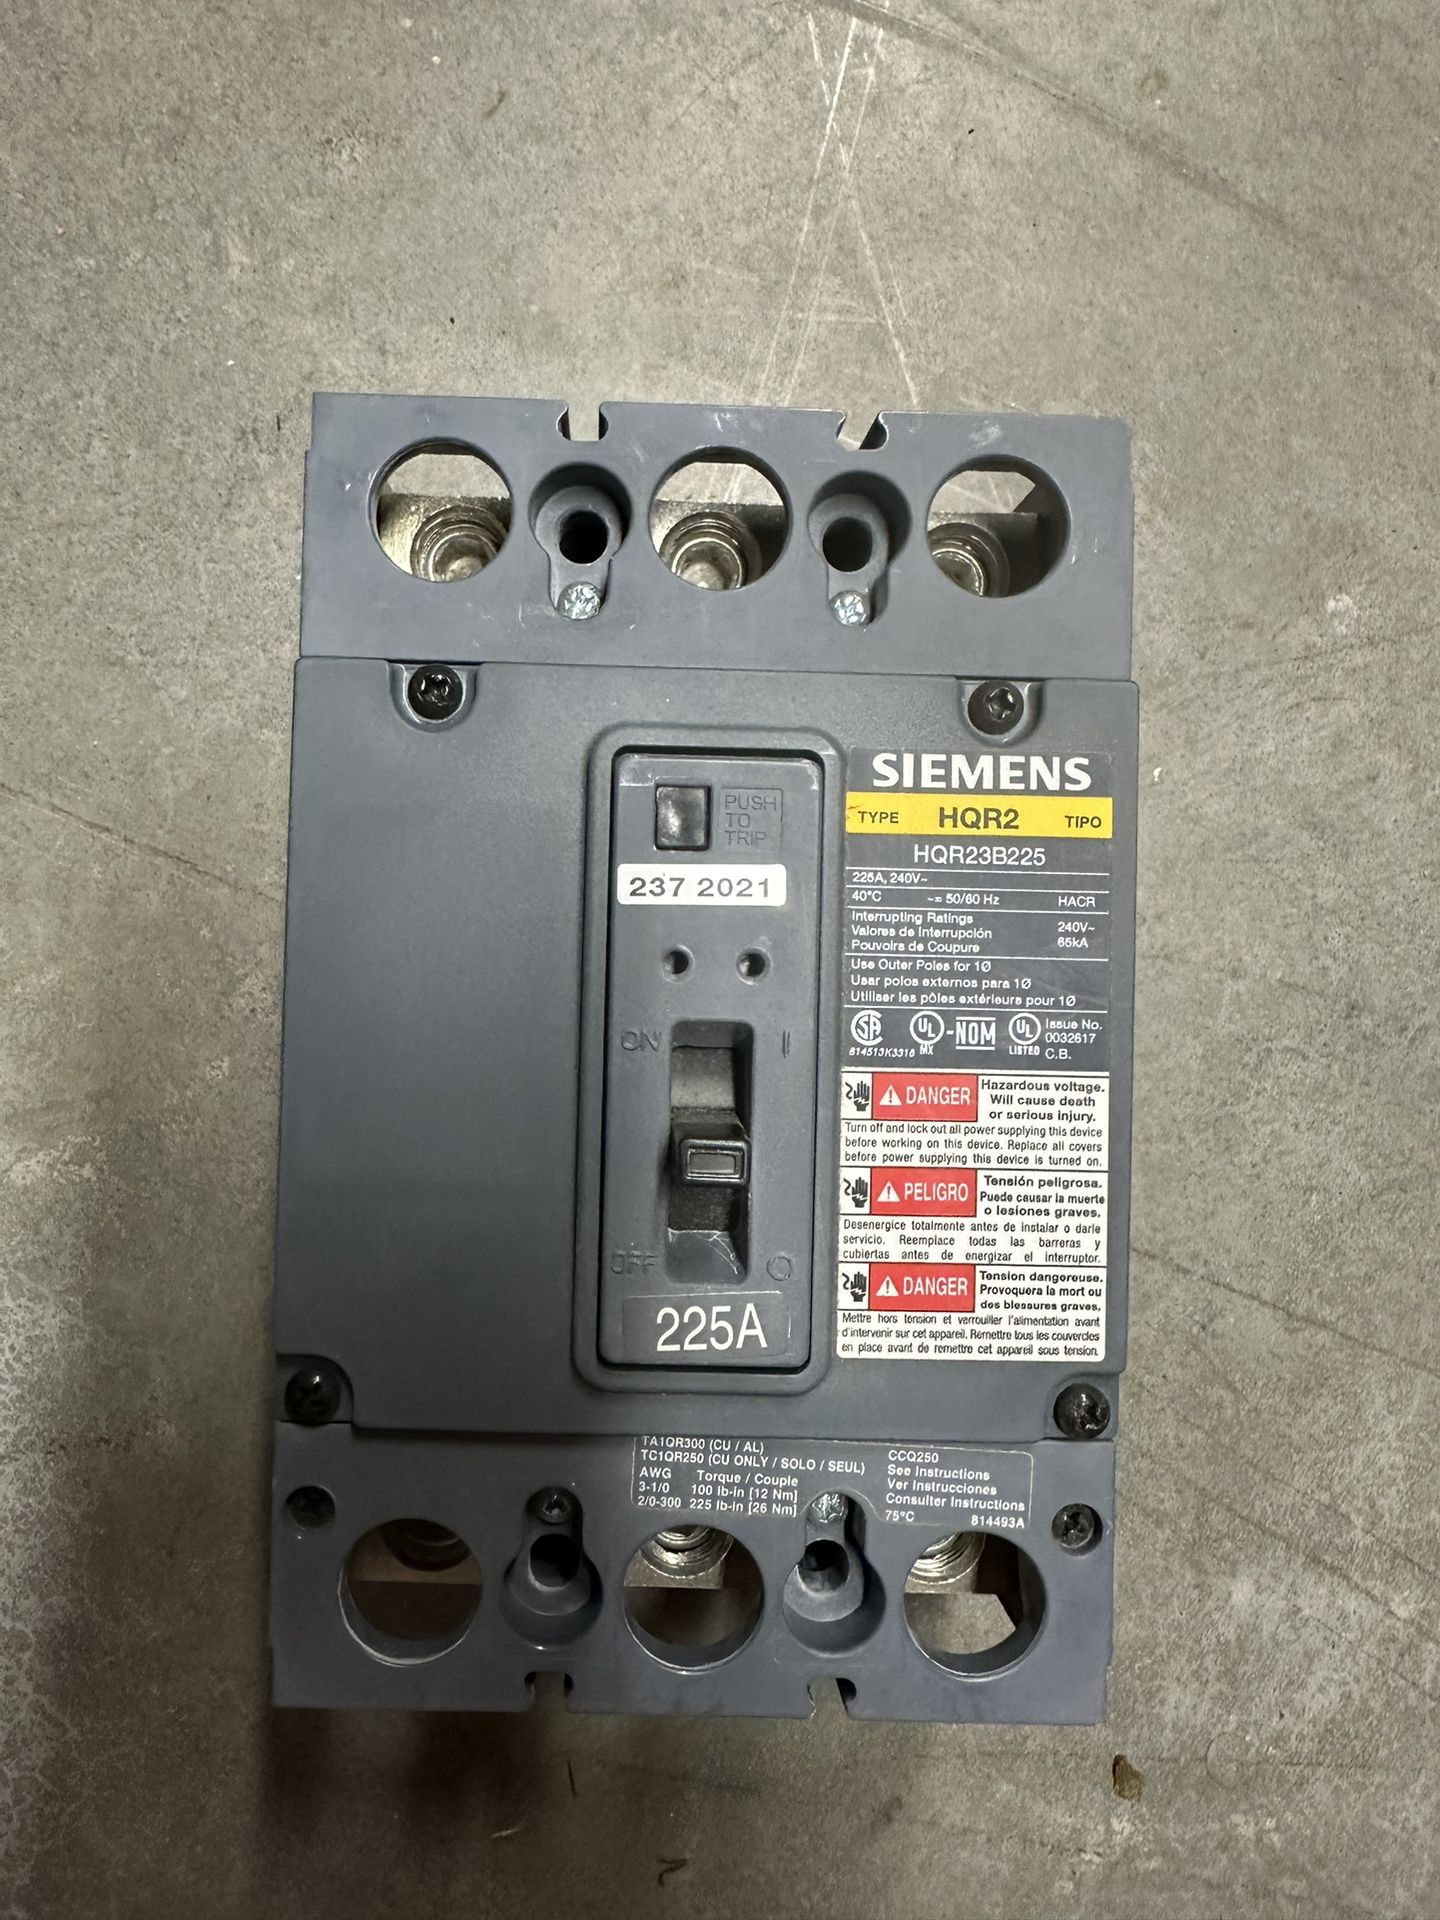 Siemens 225A HQR2 Circuit Breaker